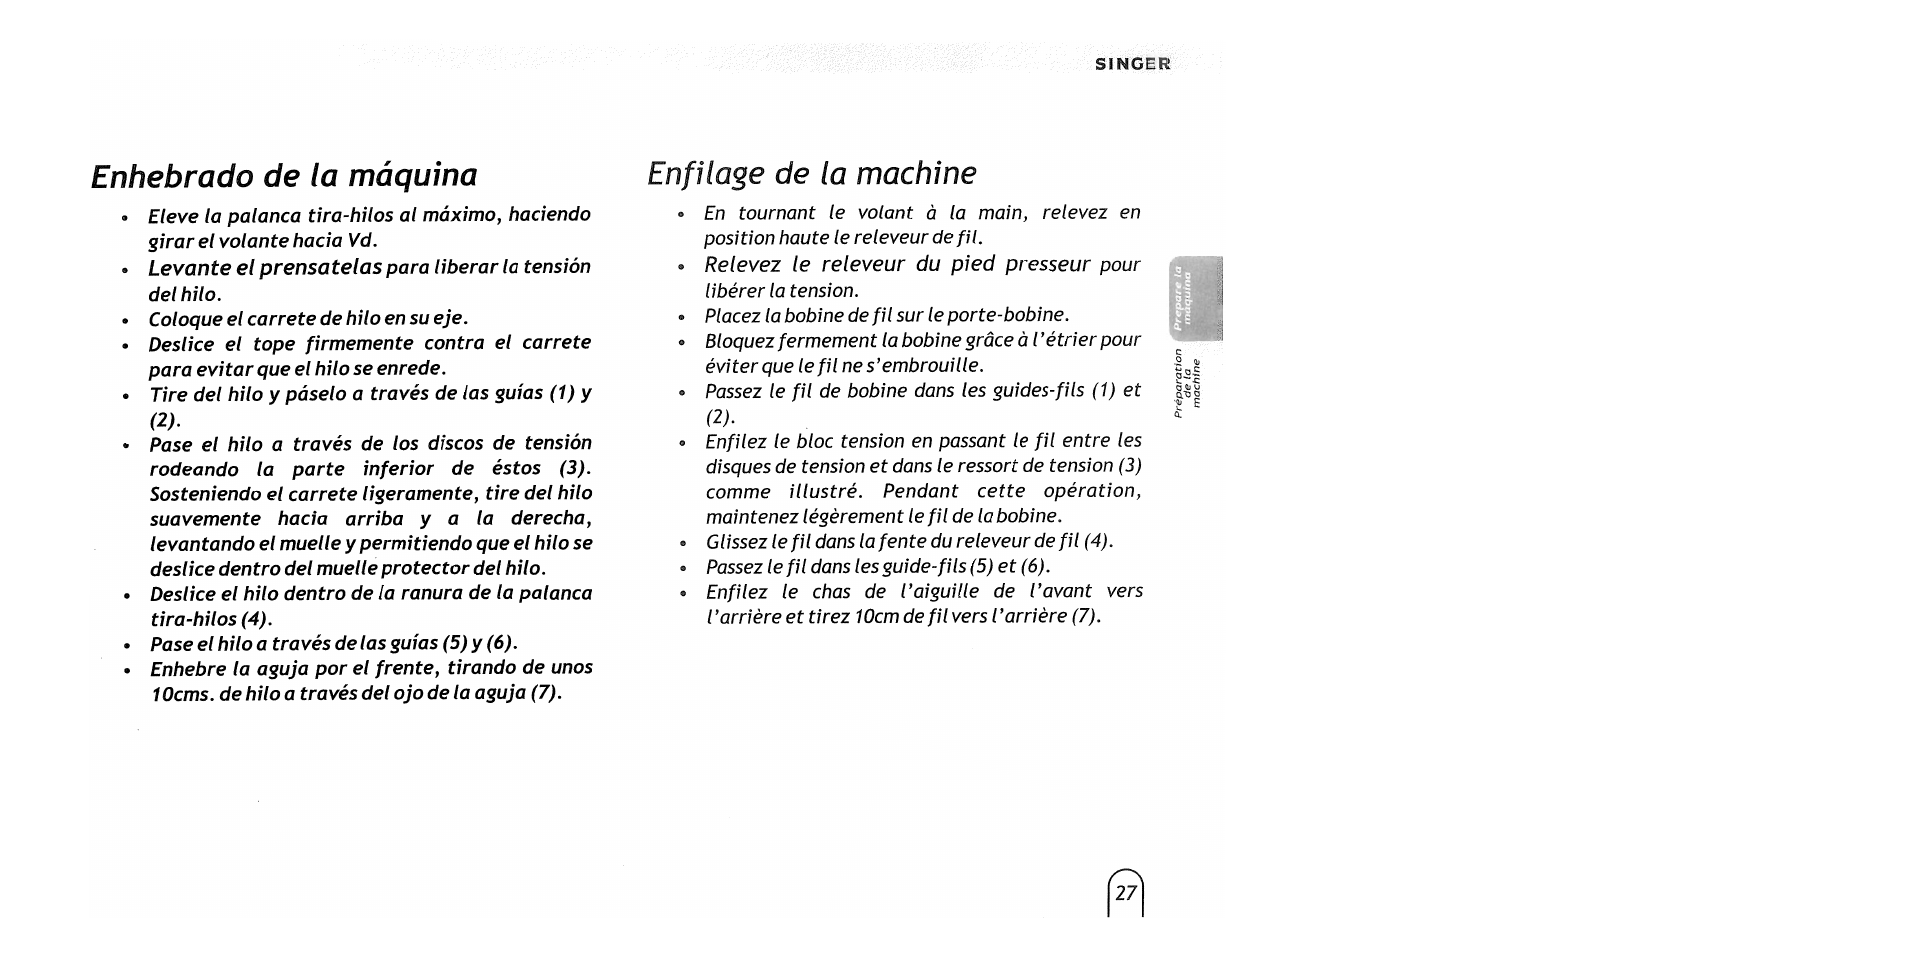 Enhebrado de la máquina, Enhebrado de la máquina enfilage de la machine, Levante el prénsatelas | SINGER 2517 Merritt User Manual | Page 29 / 80